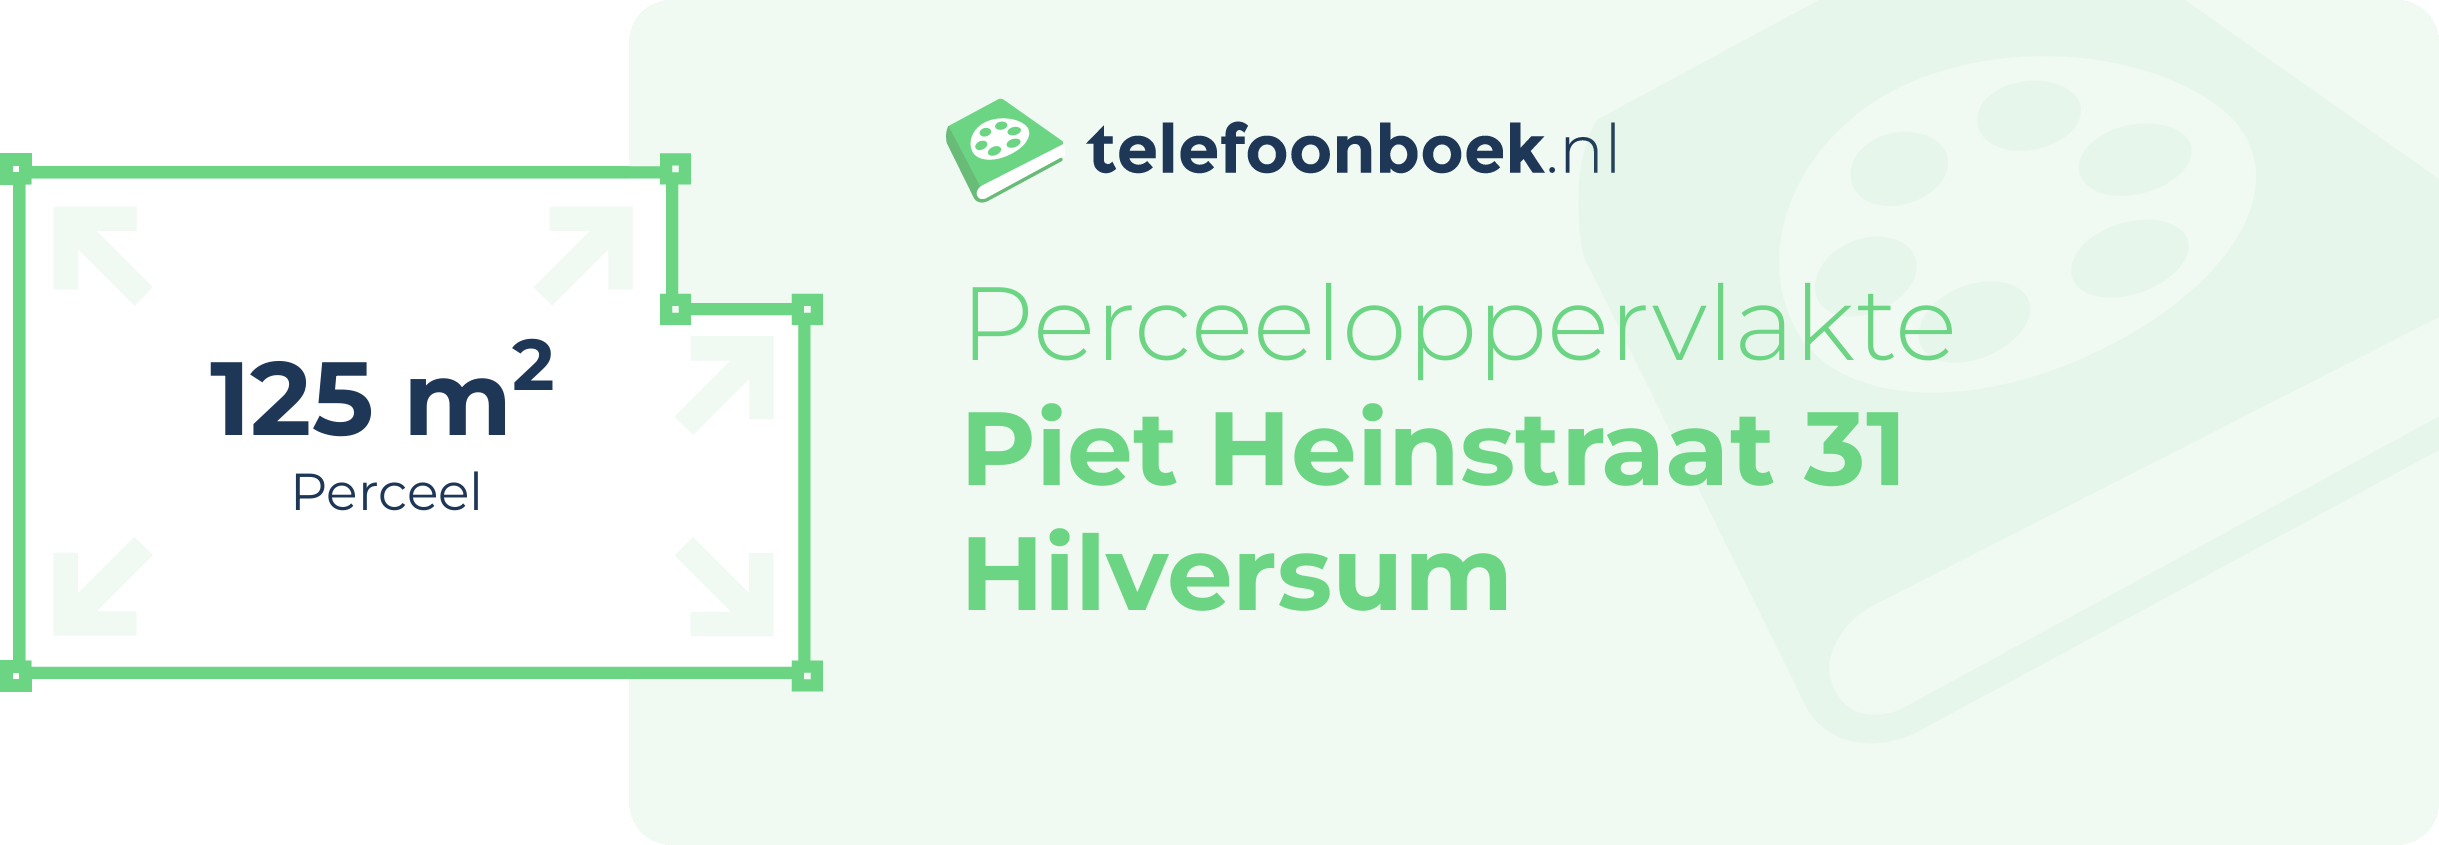 Perceeloppervlakte Piet Heinstraat 31 Hilversum